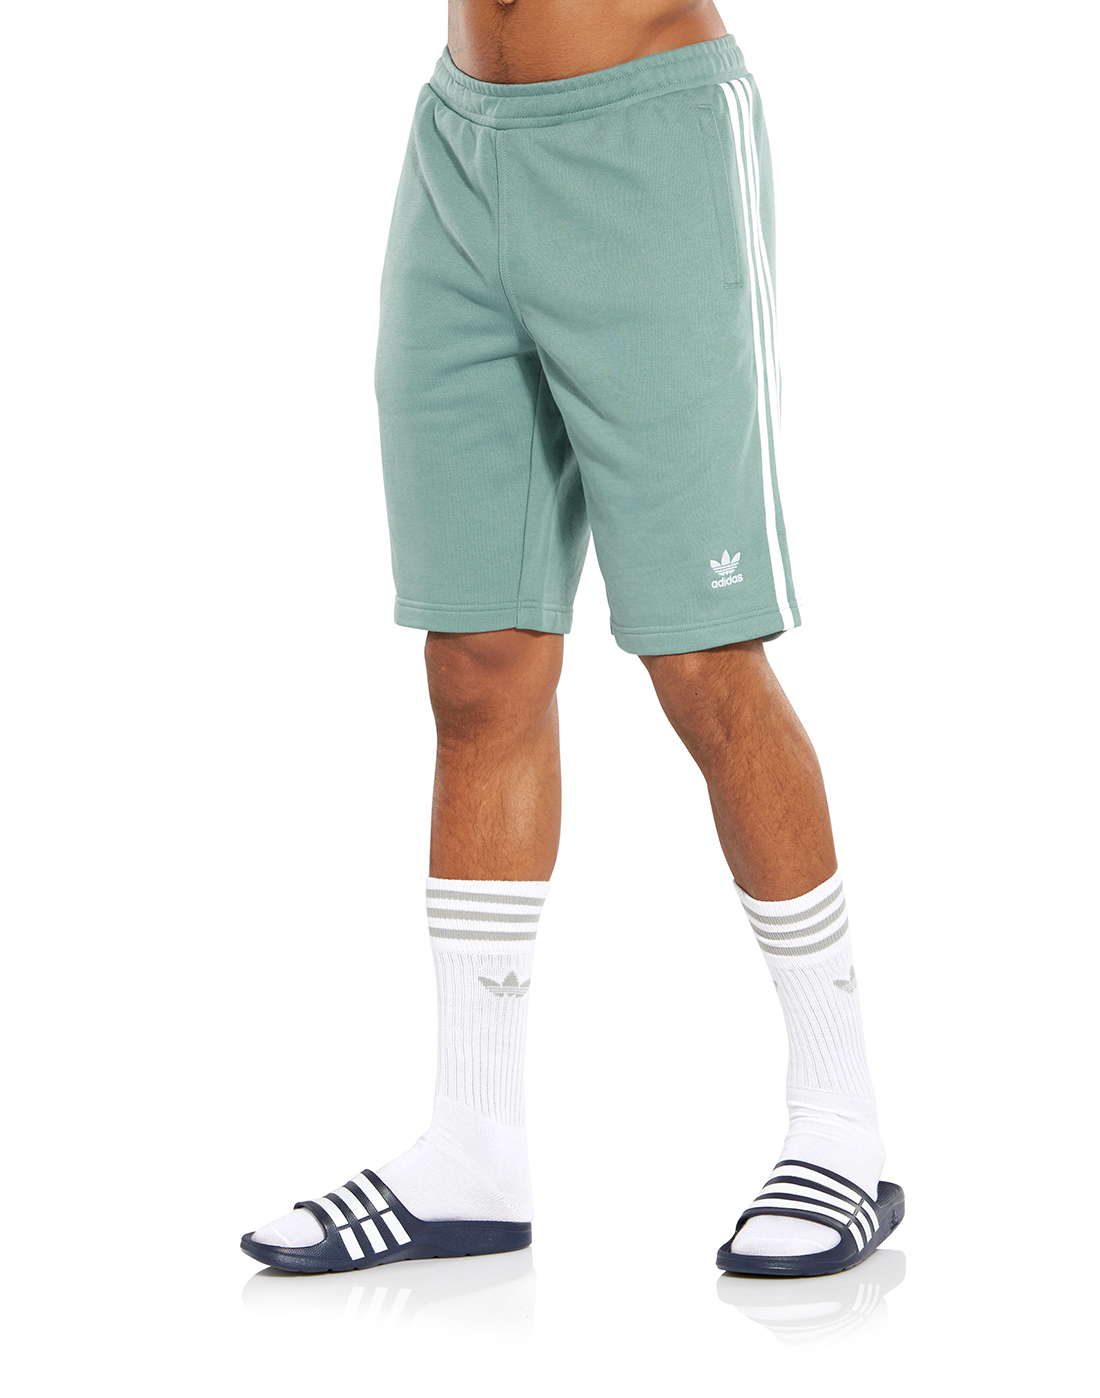 green and white adidas shorts